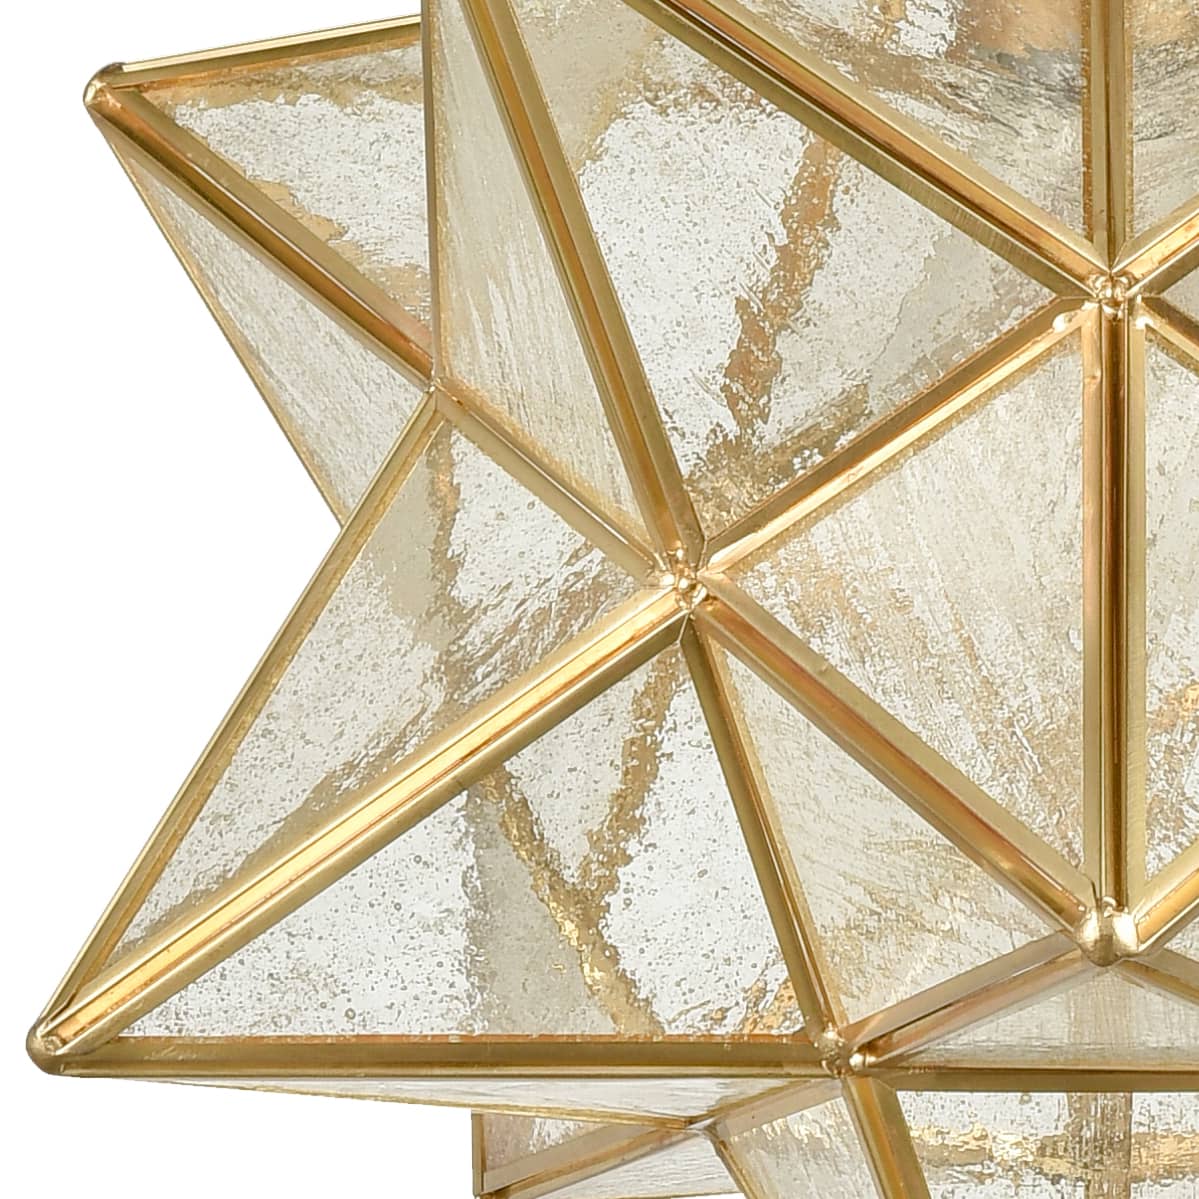 Brass Moravian Star Pendant Light 14-inch Seeded Glass Shade